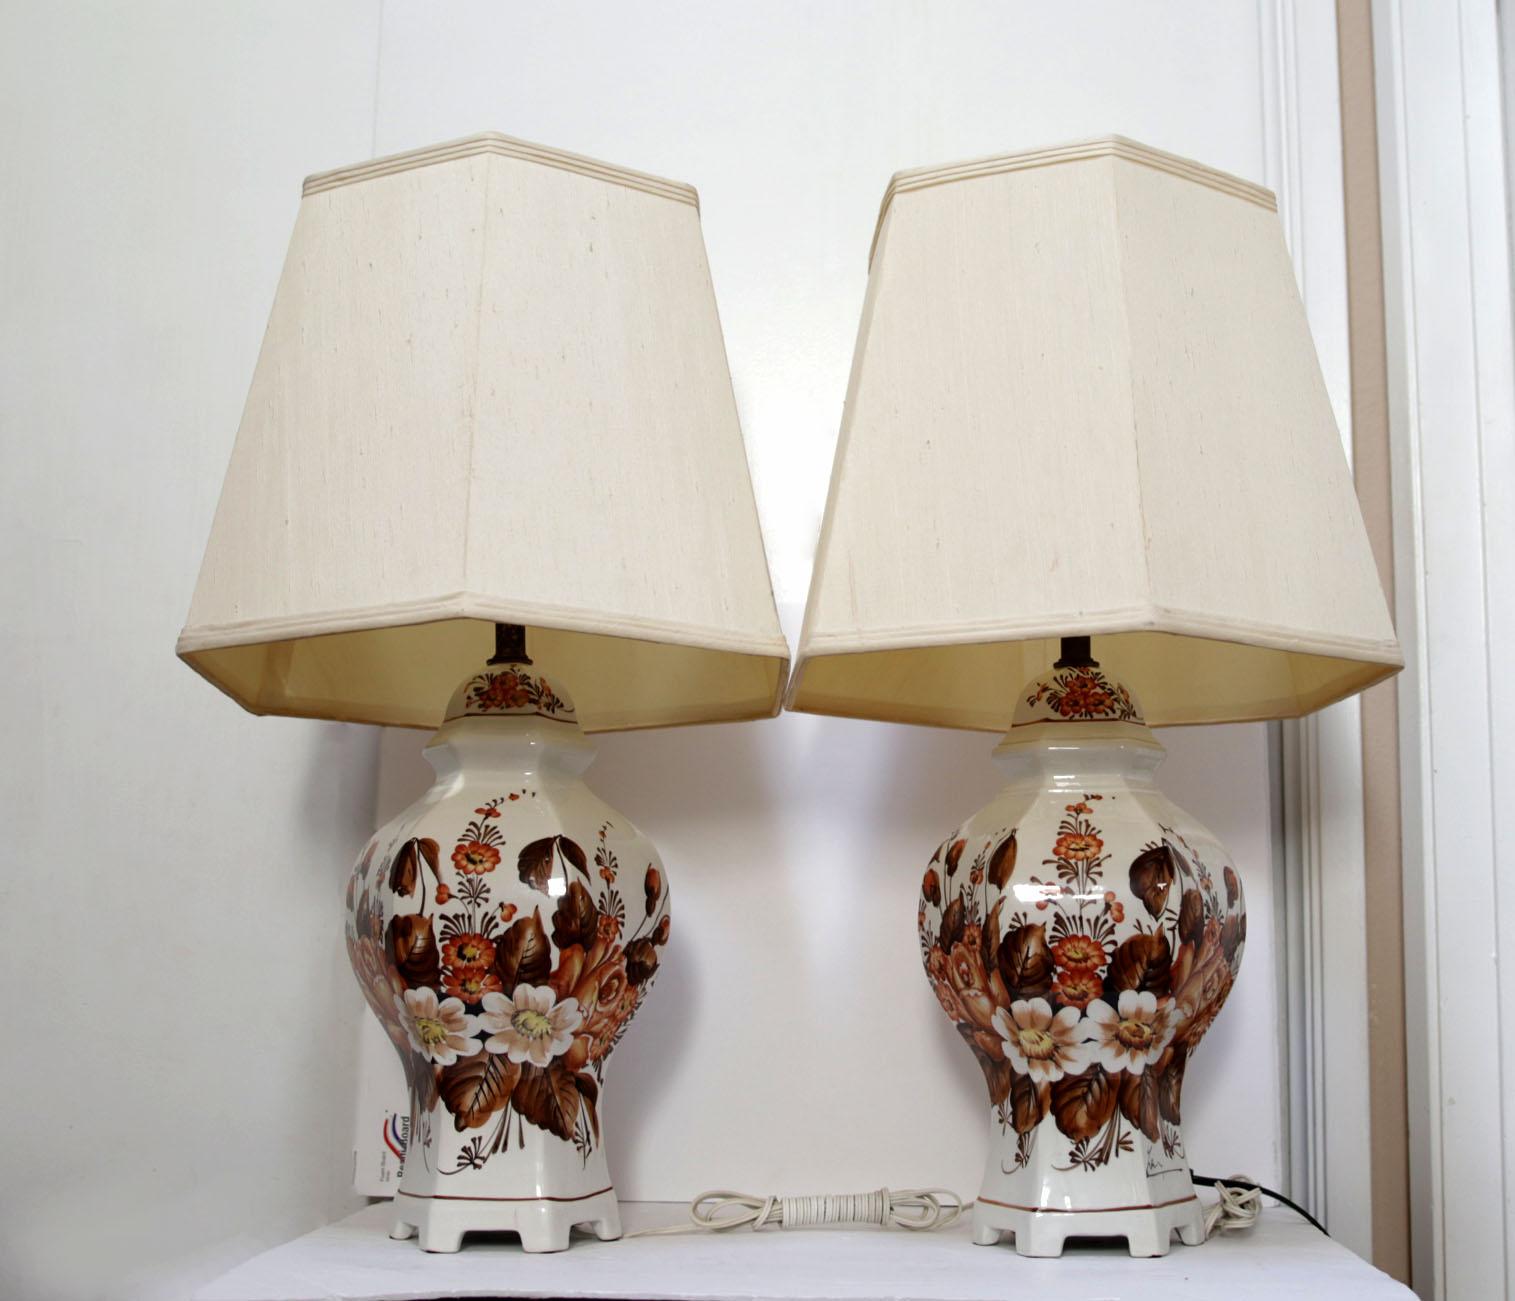 Pair of Signed Antonio Zen Hexagonal Lamps, Made in Italy For Sale 6